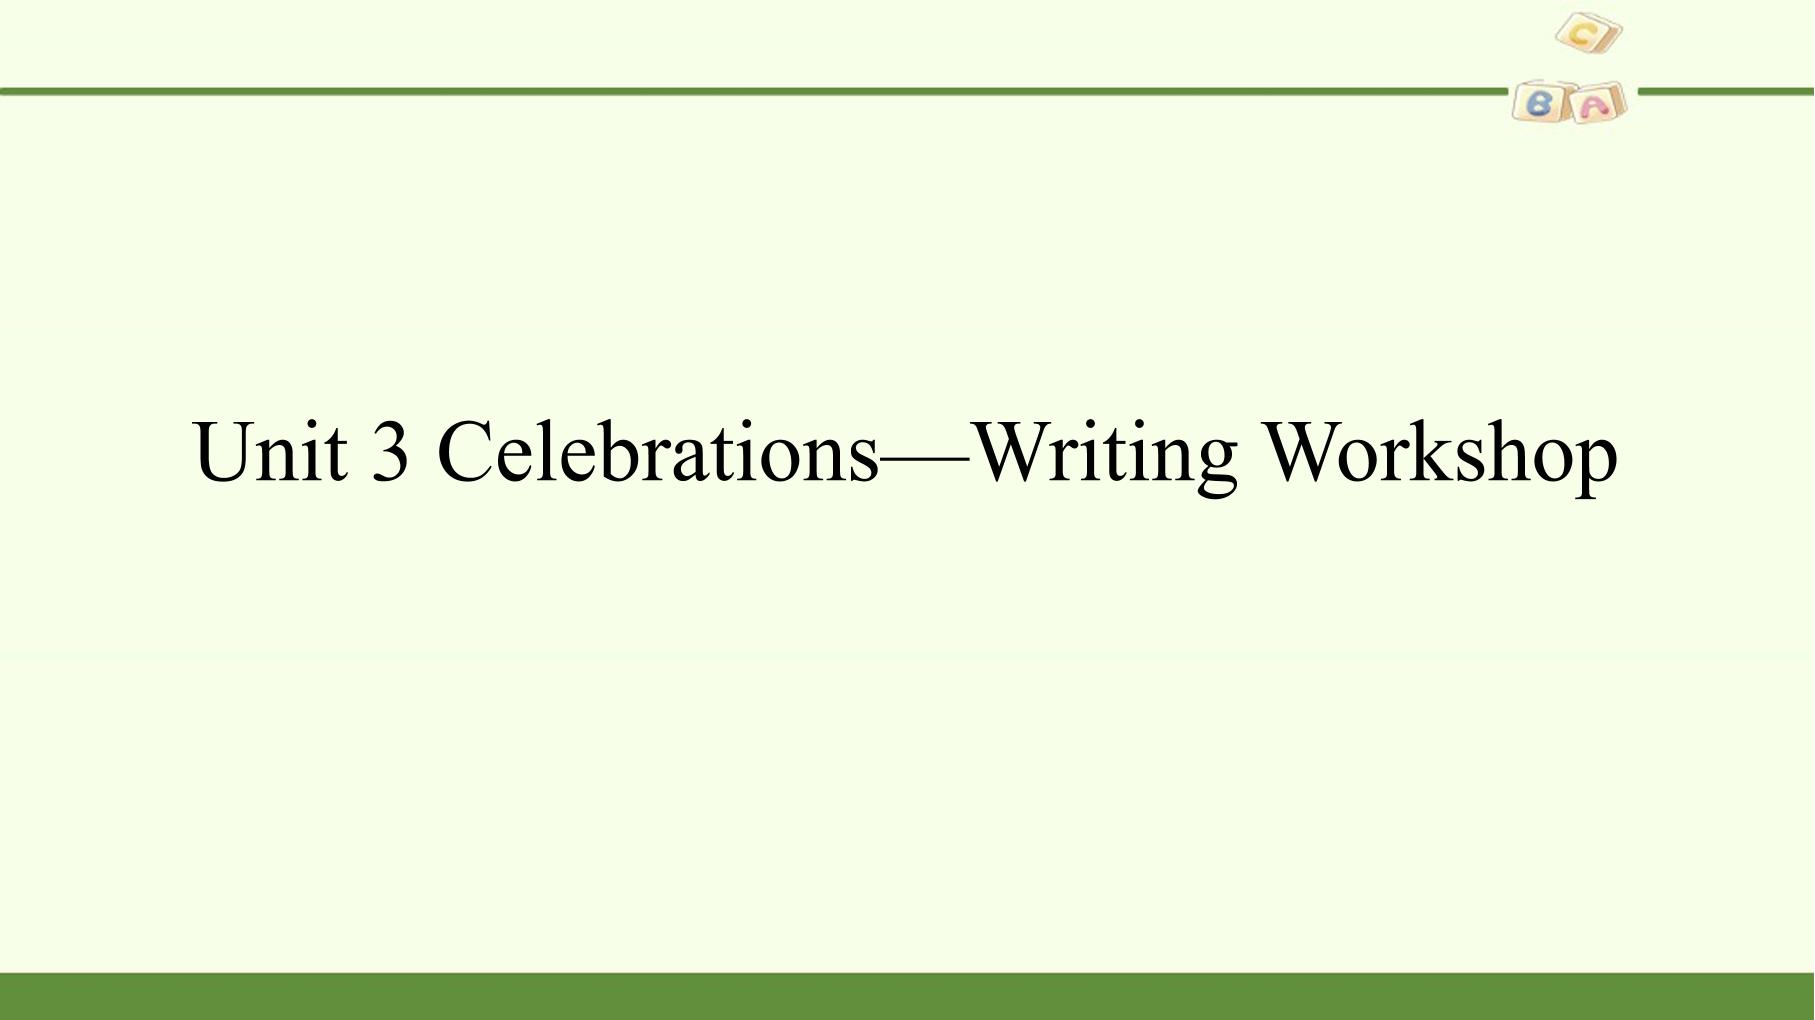 Writing Workshop—An Event Description